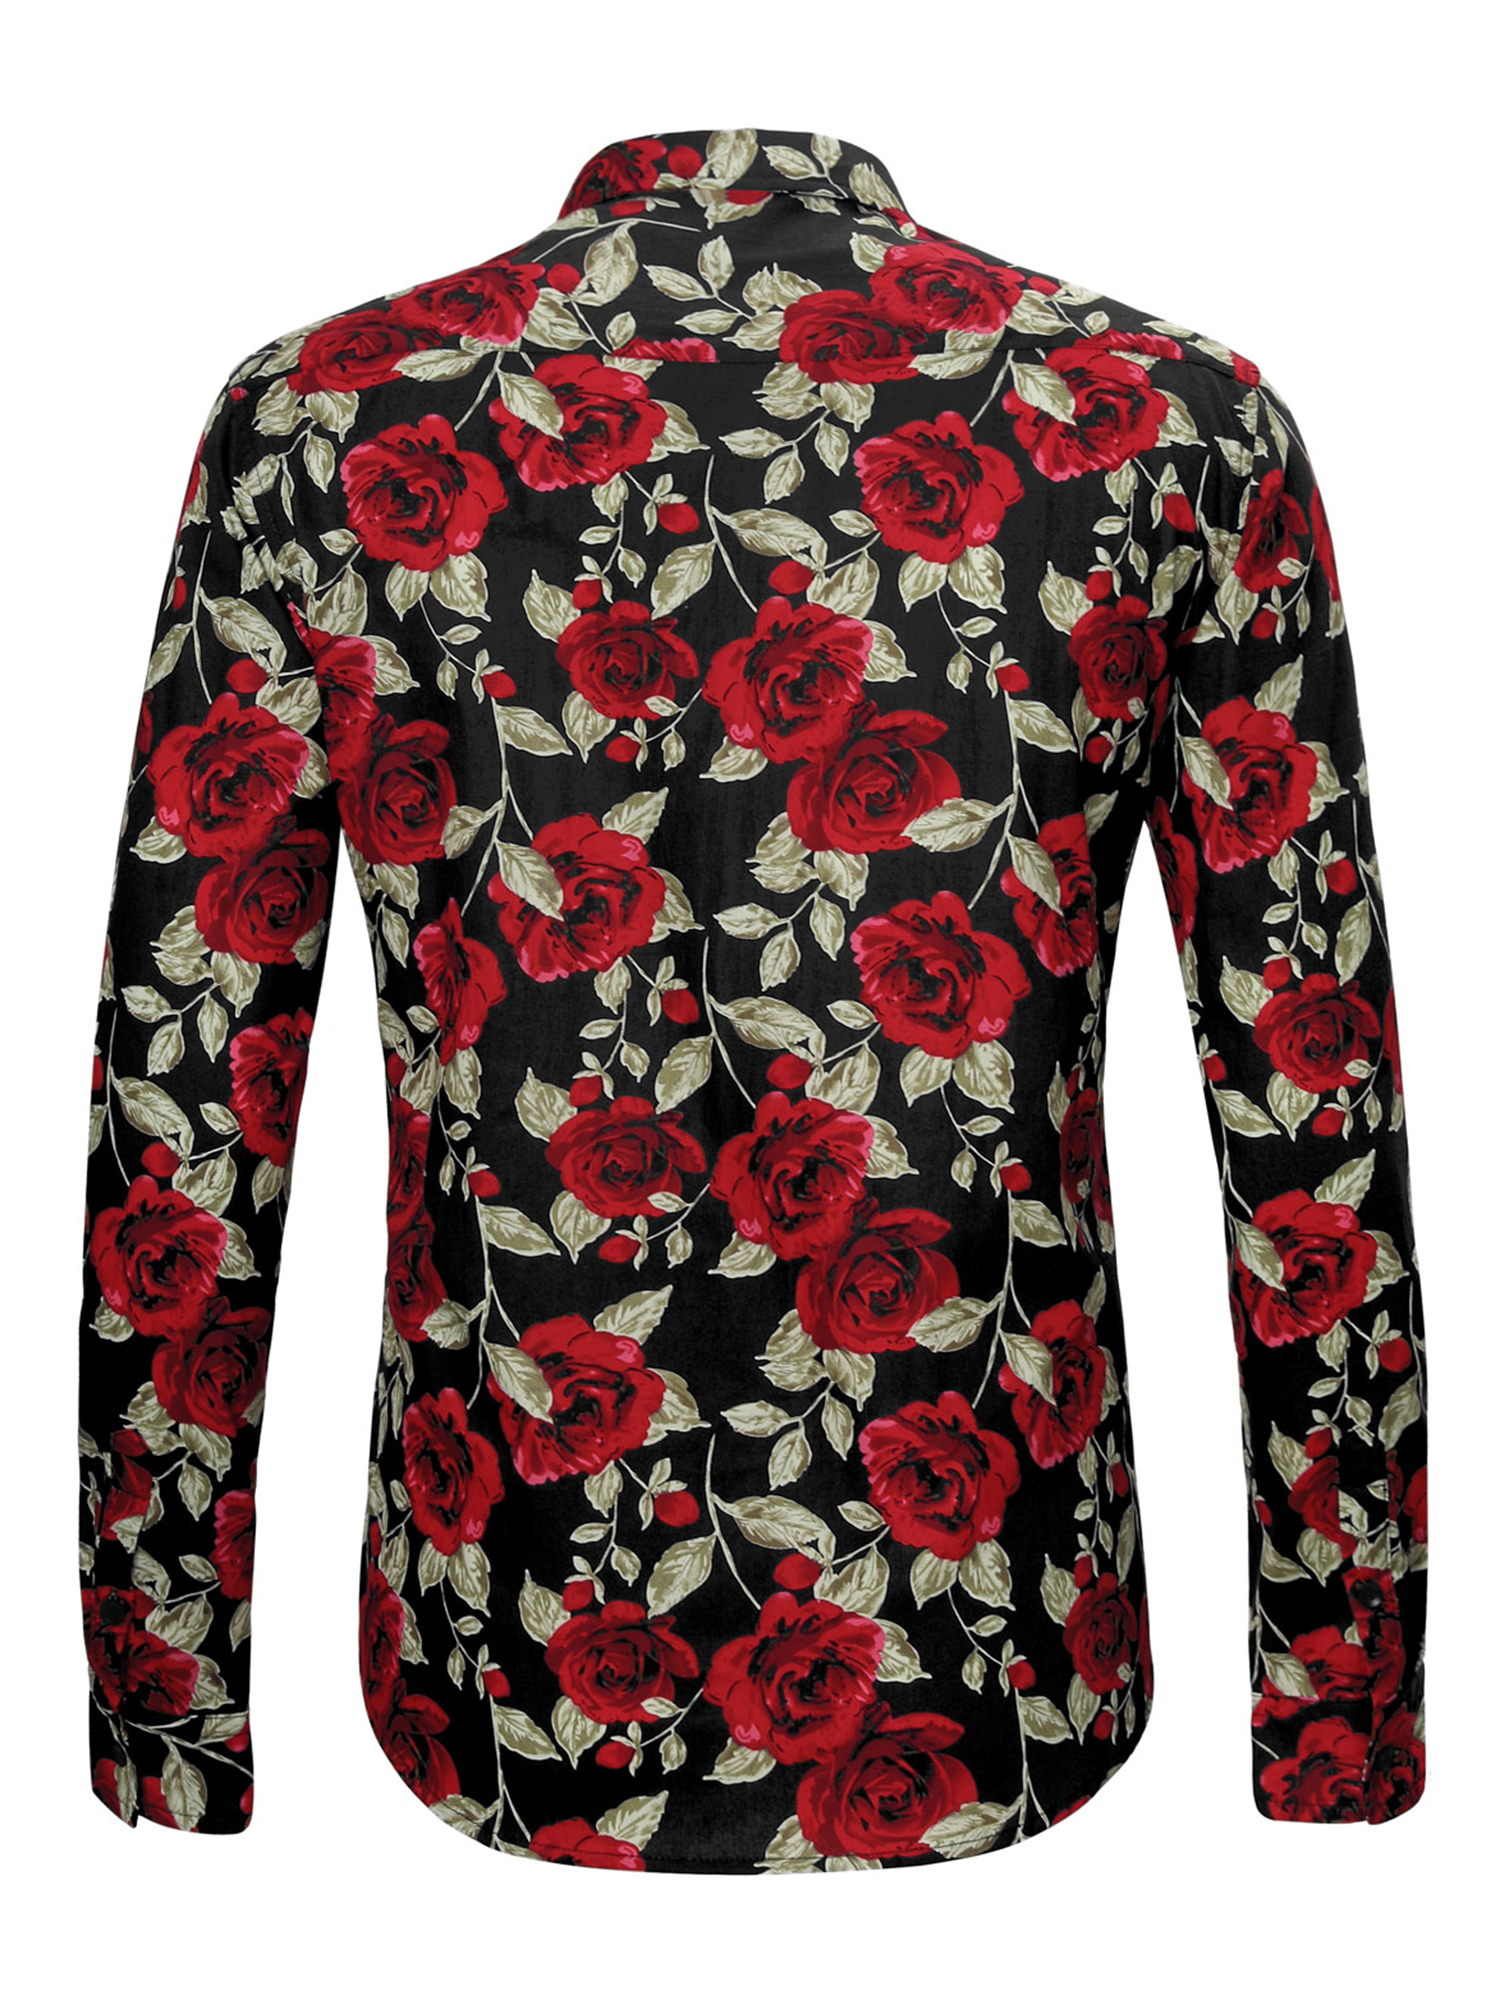 MODA NOVA Big & Tall Men's Floral Point Collar Long Sleeve Hawaiian Shirt Black Rose 3XLT - image 3 of 6